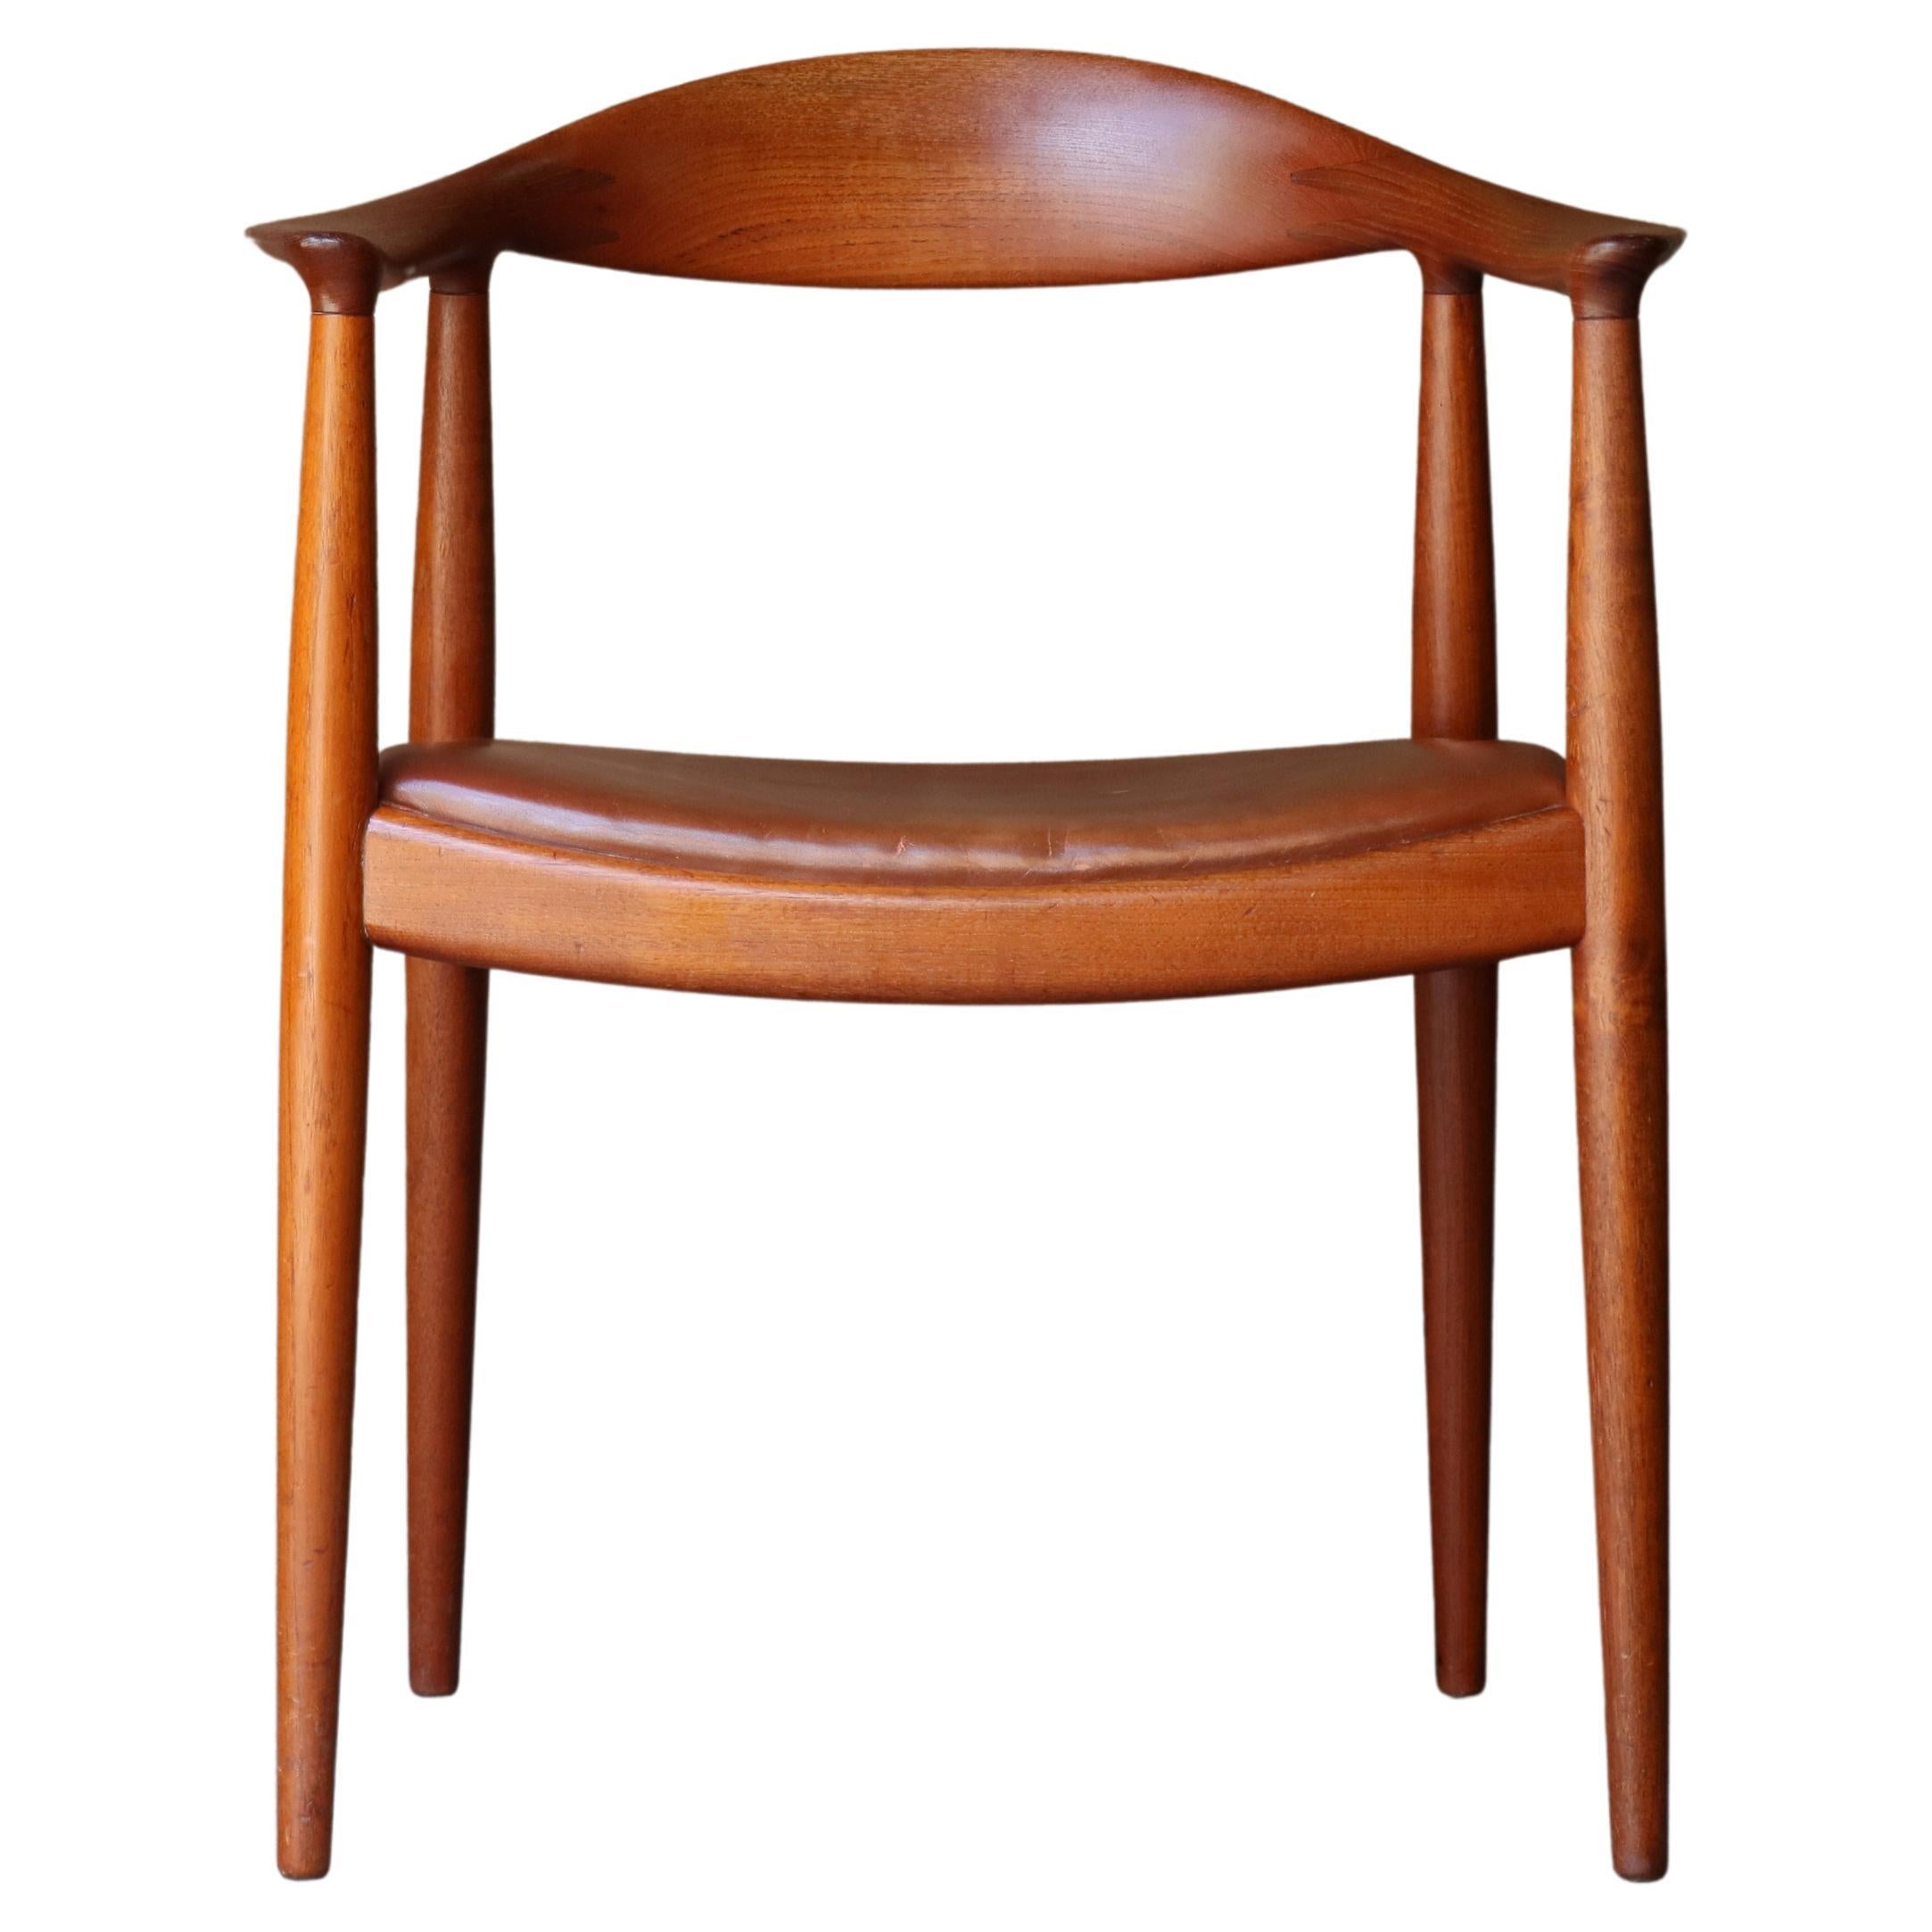 Early Hans J. Wegner Round Chair, JH 503, Teak & Leather 